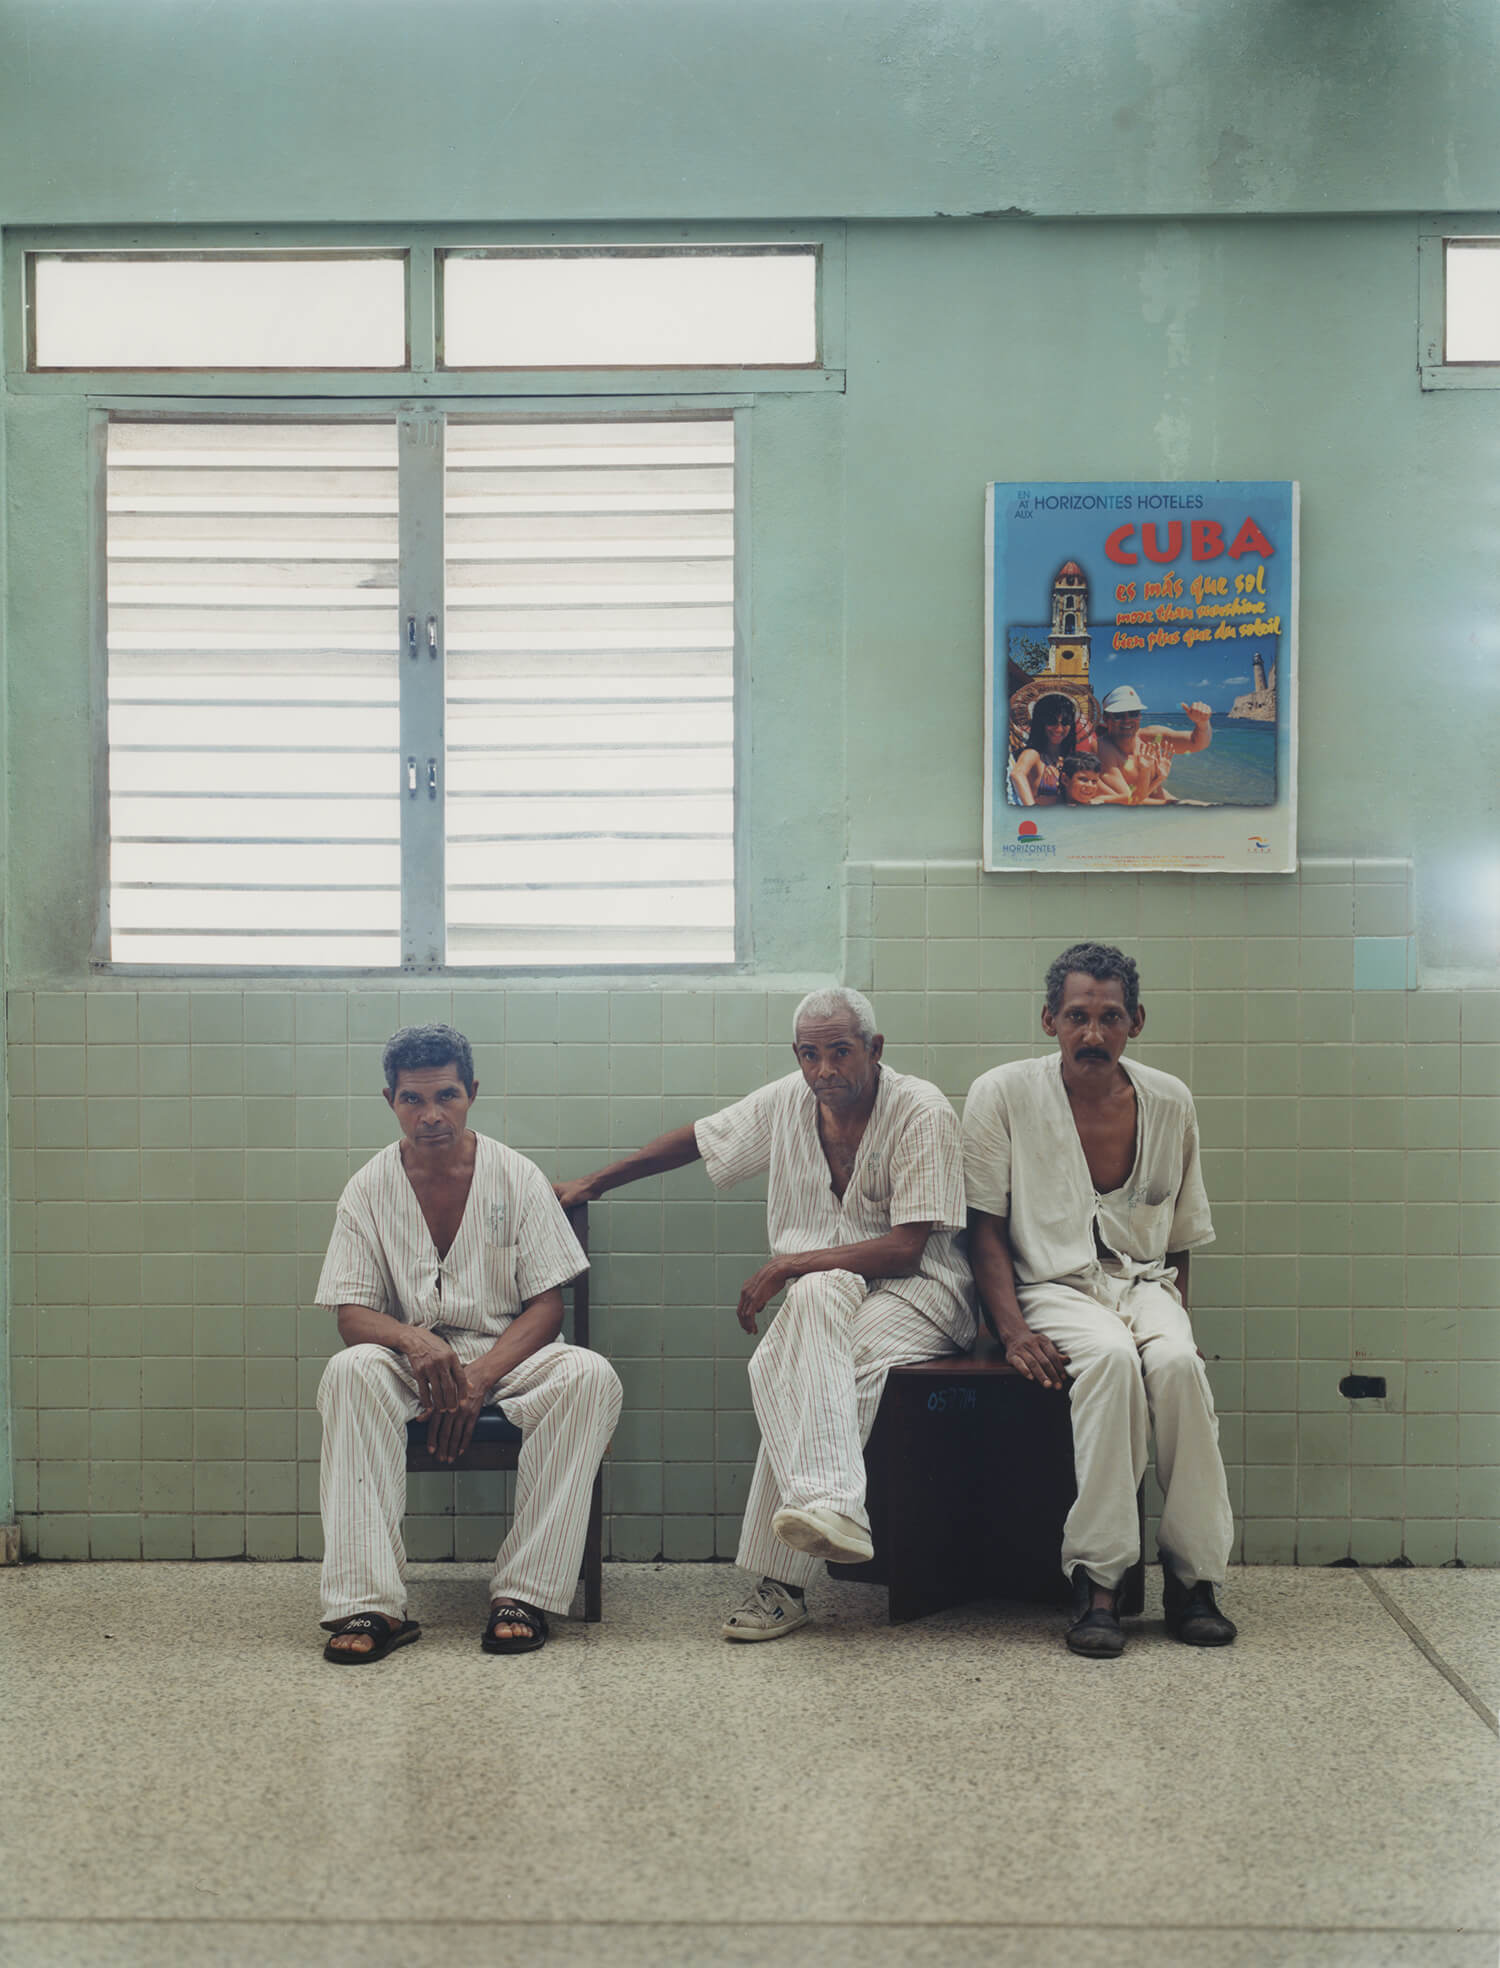  Rene Vallejo Psychiatric Hospital, Cuba, C-type print, 16 x 20 inches, 2003 